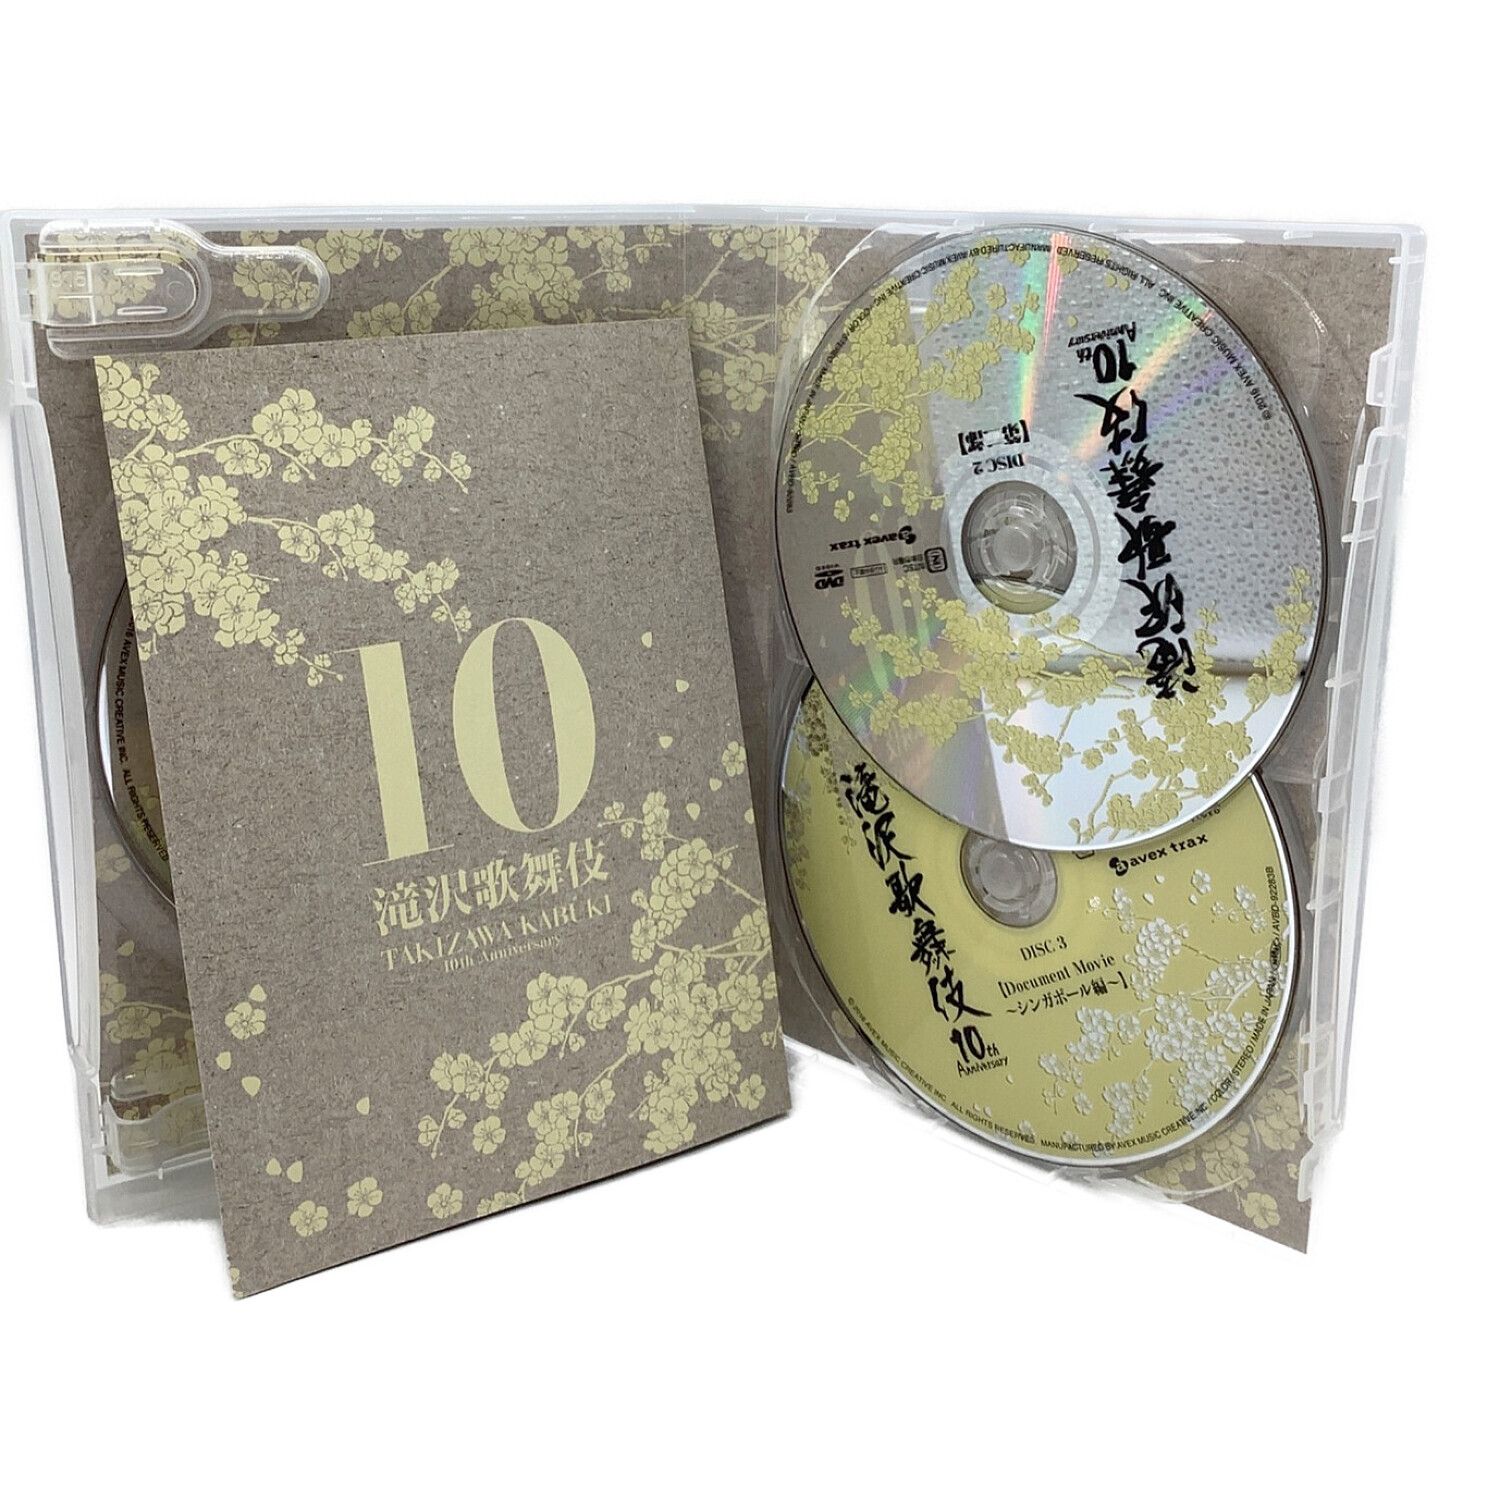 滝沢歌舞伎10th Anniversary日本盤